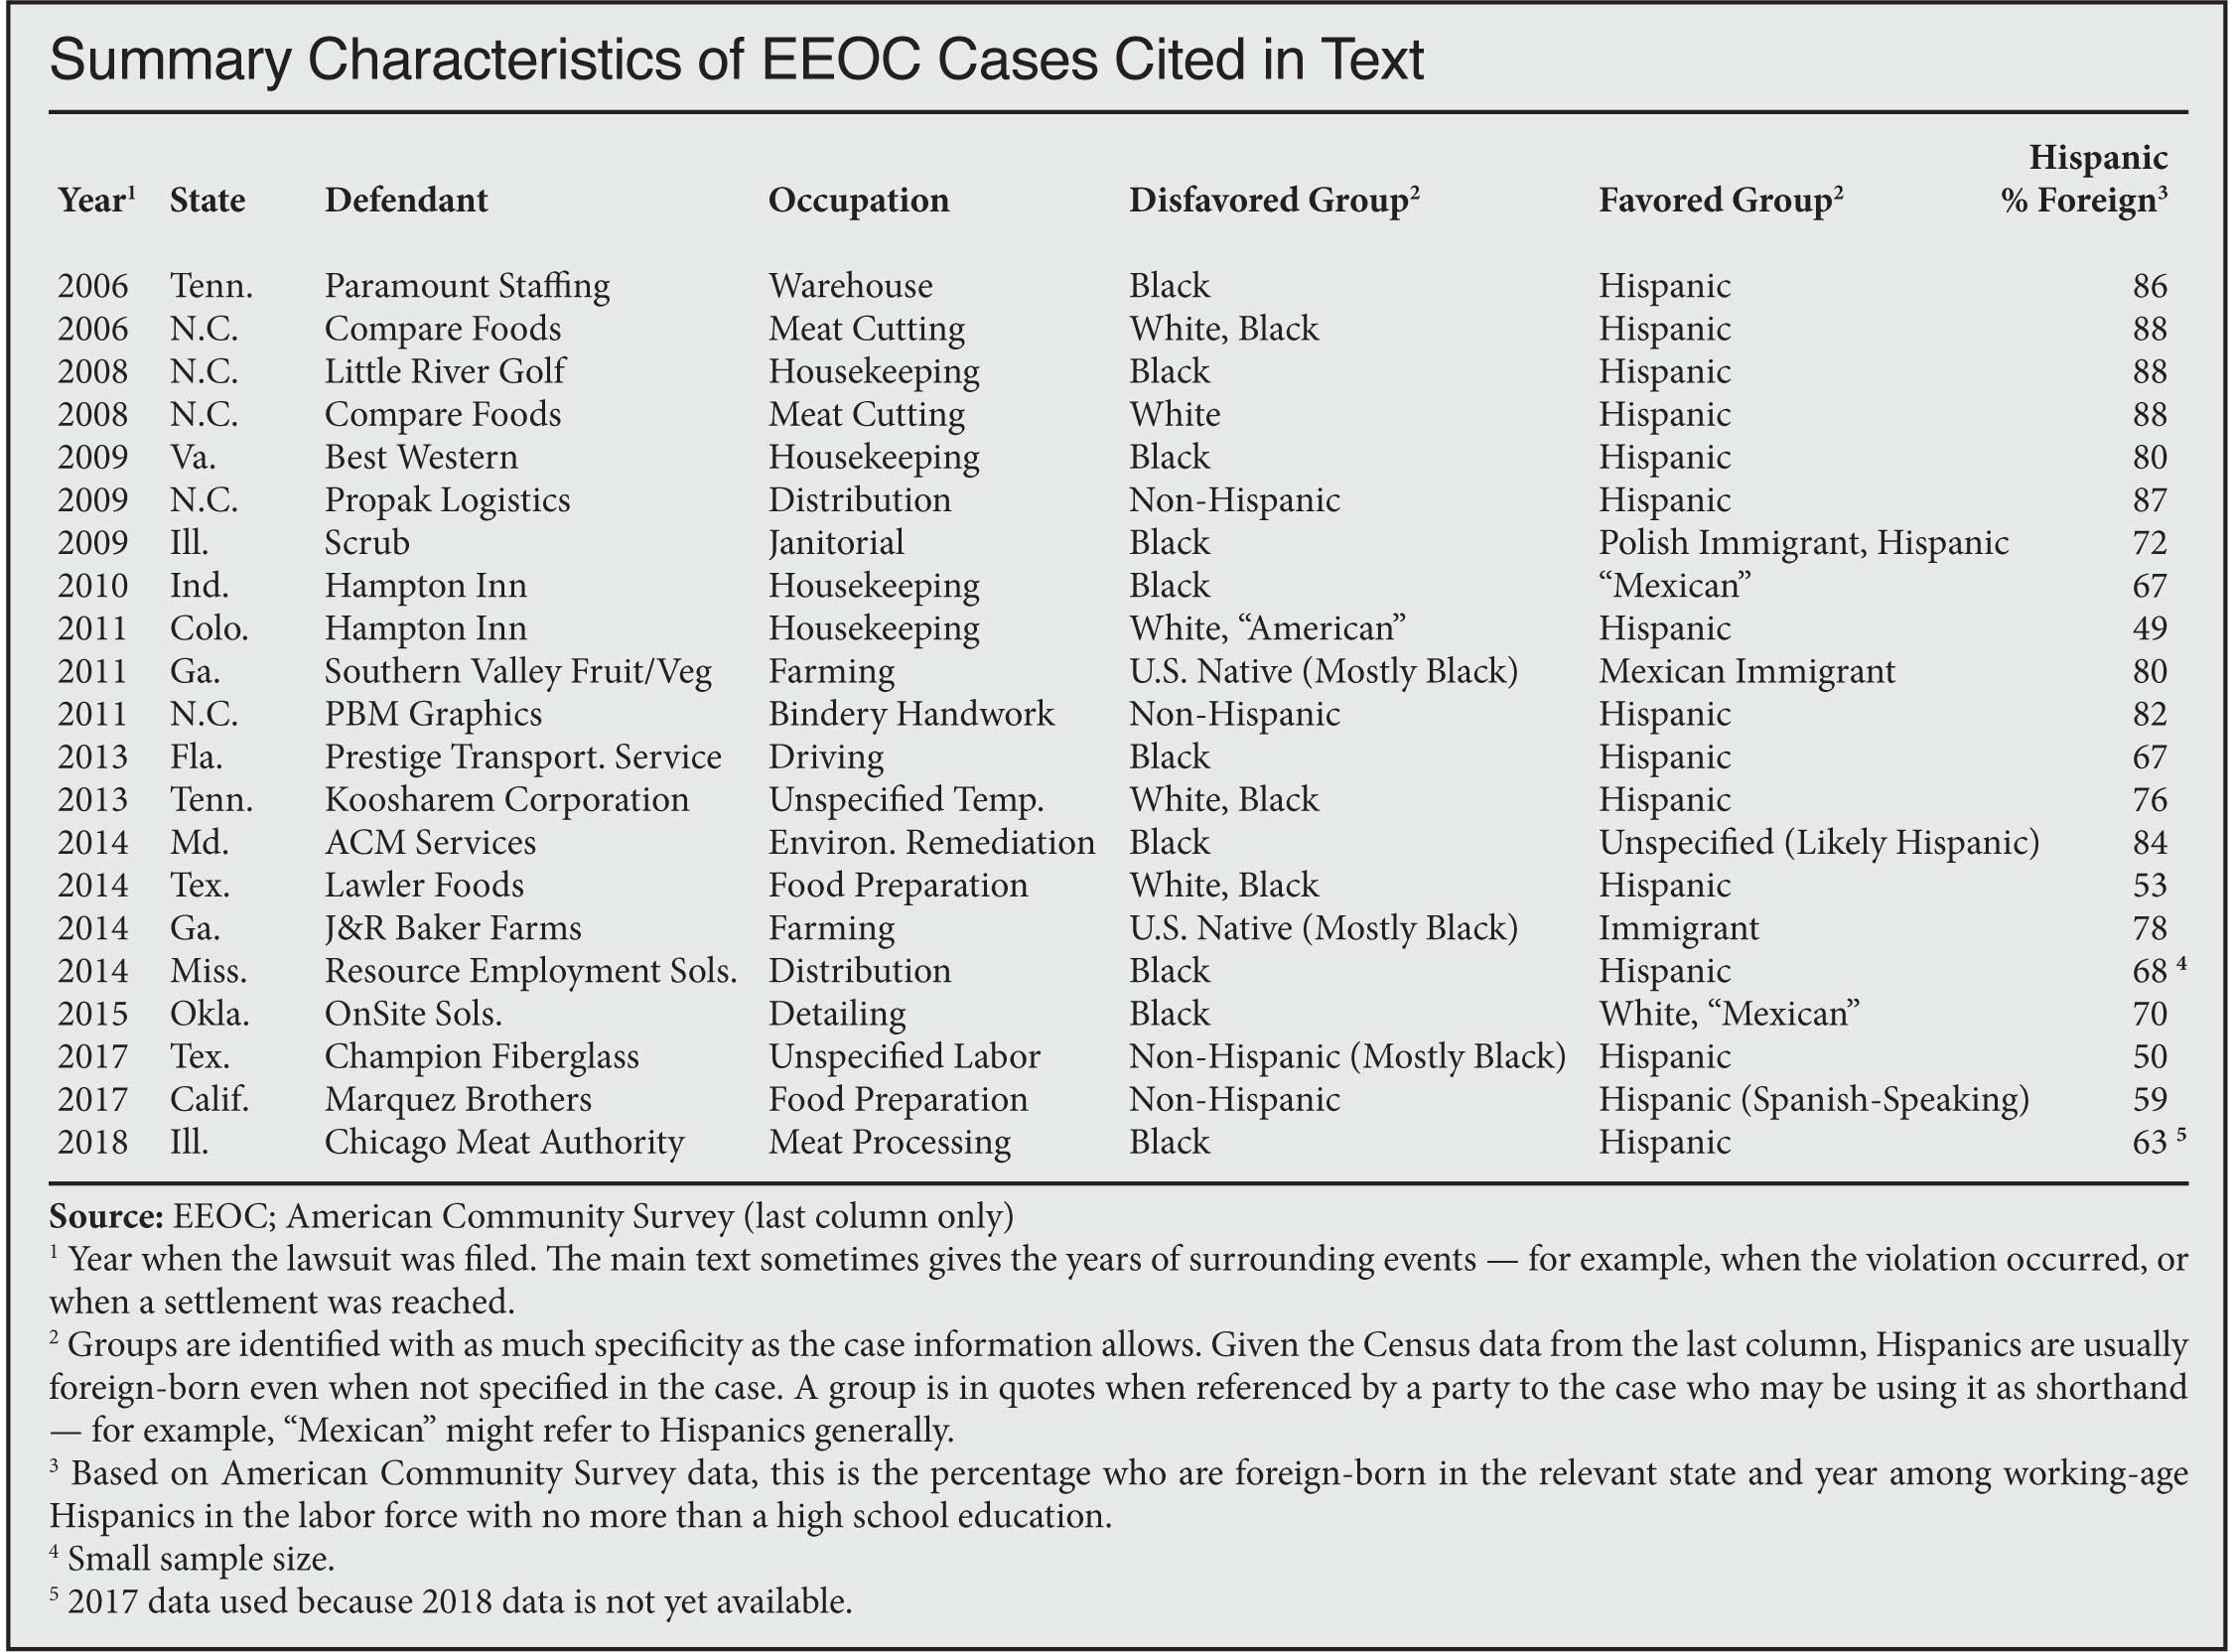 Table: Summary Characteristics of EEOC Cases